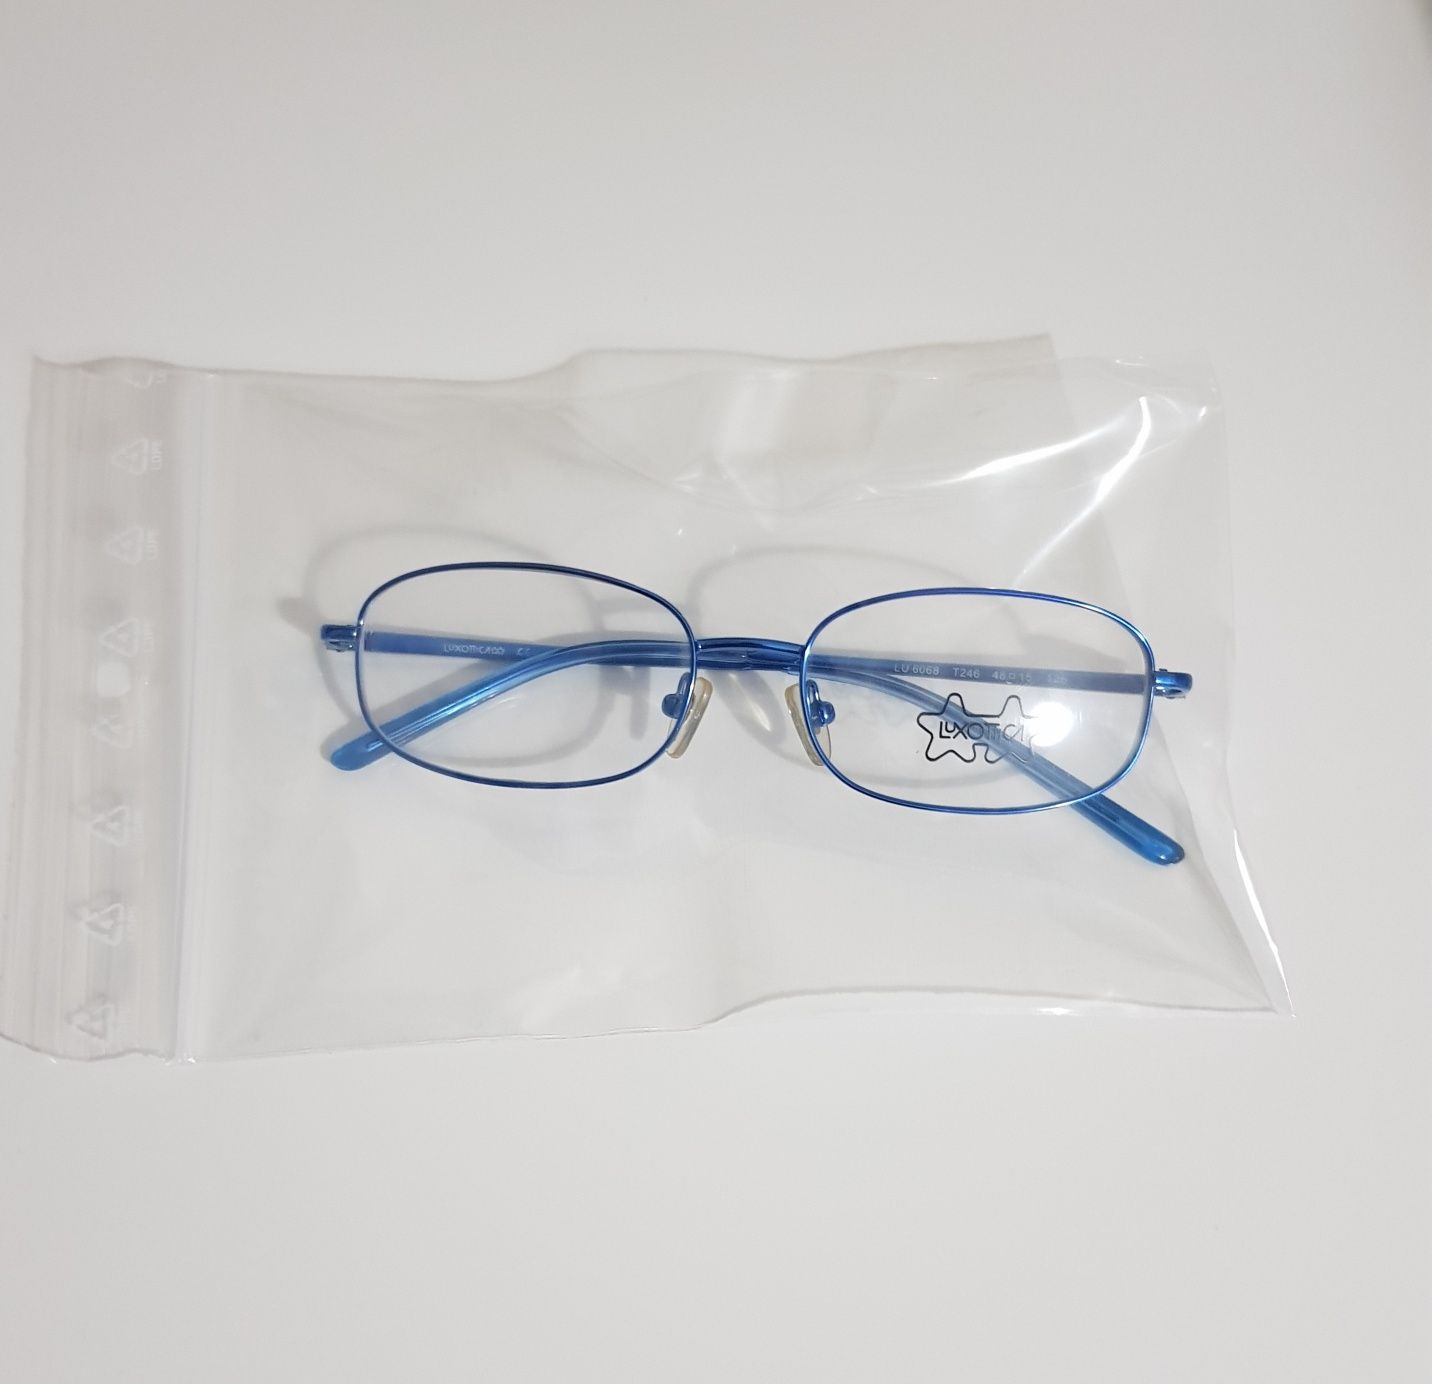 LUXOTTICA. Rame ochelari copii. Made in Italy. Produs nou.